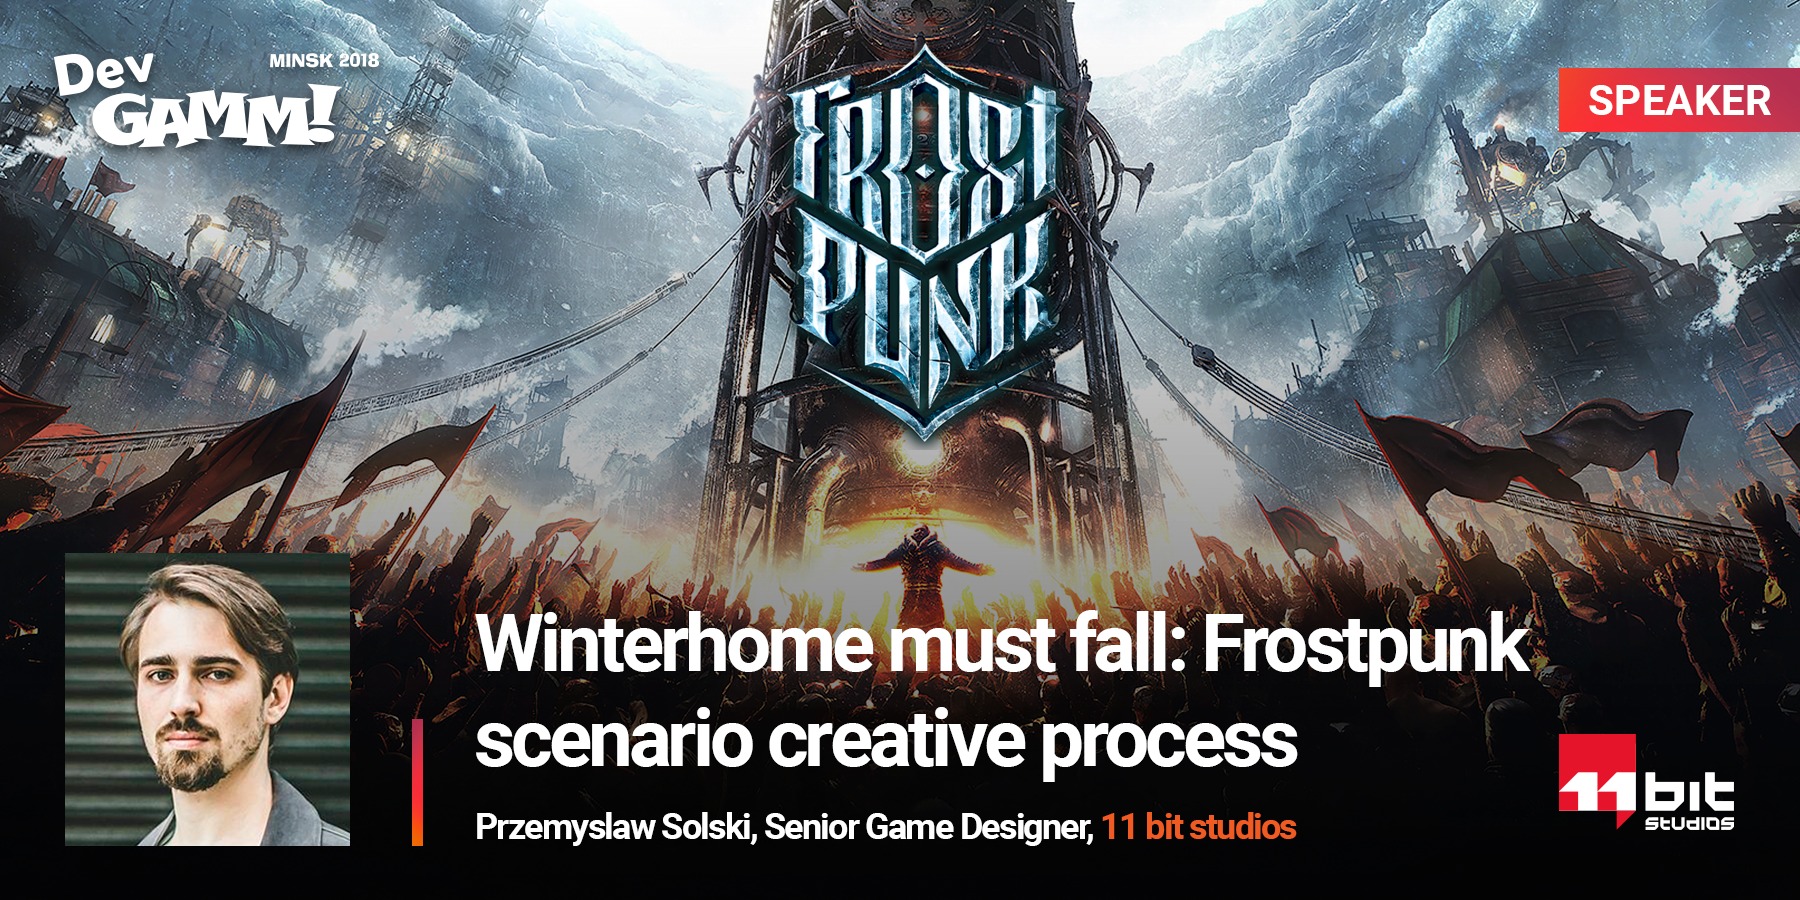 Przemyslaw Solski about Frostpunk scenario creative process